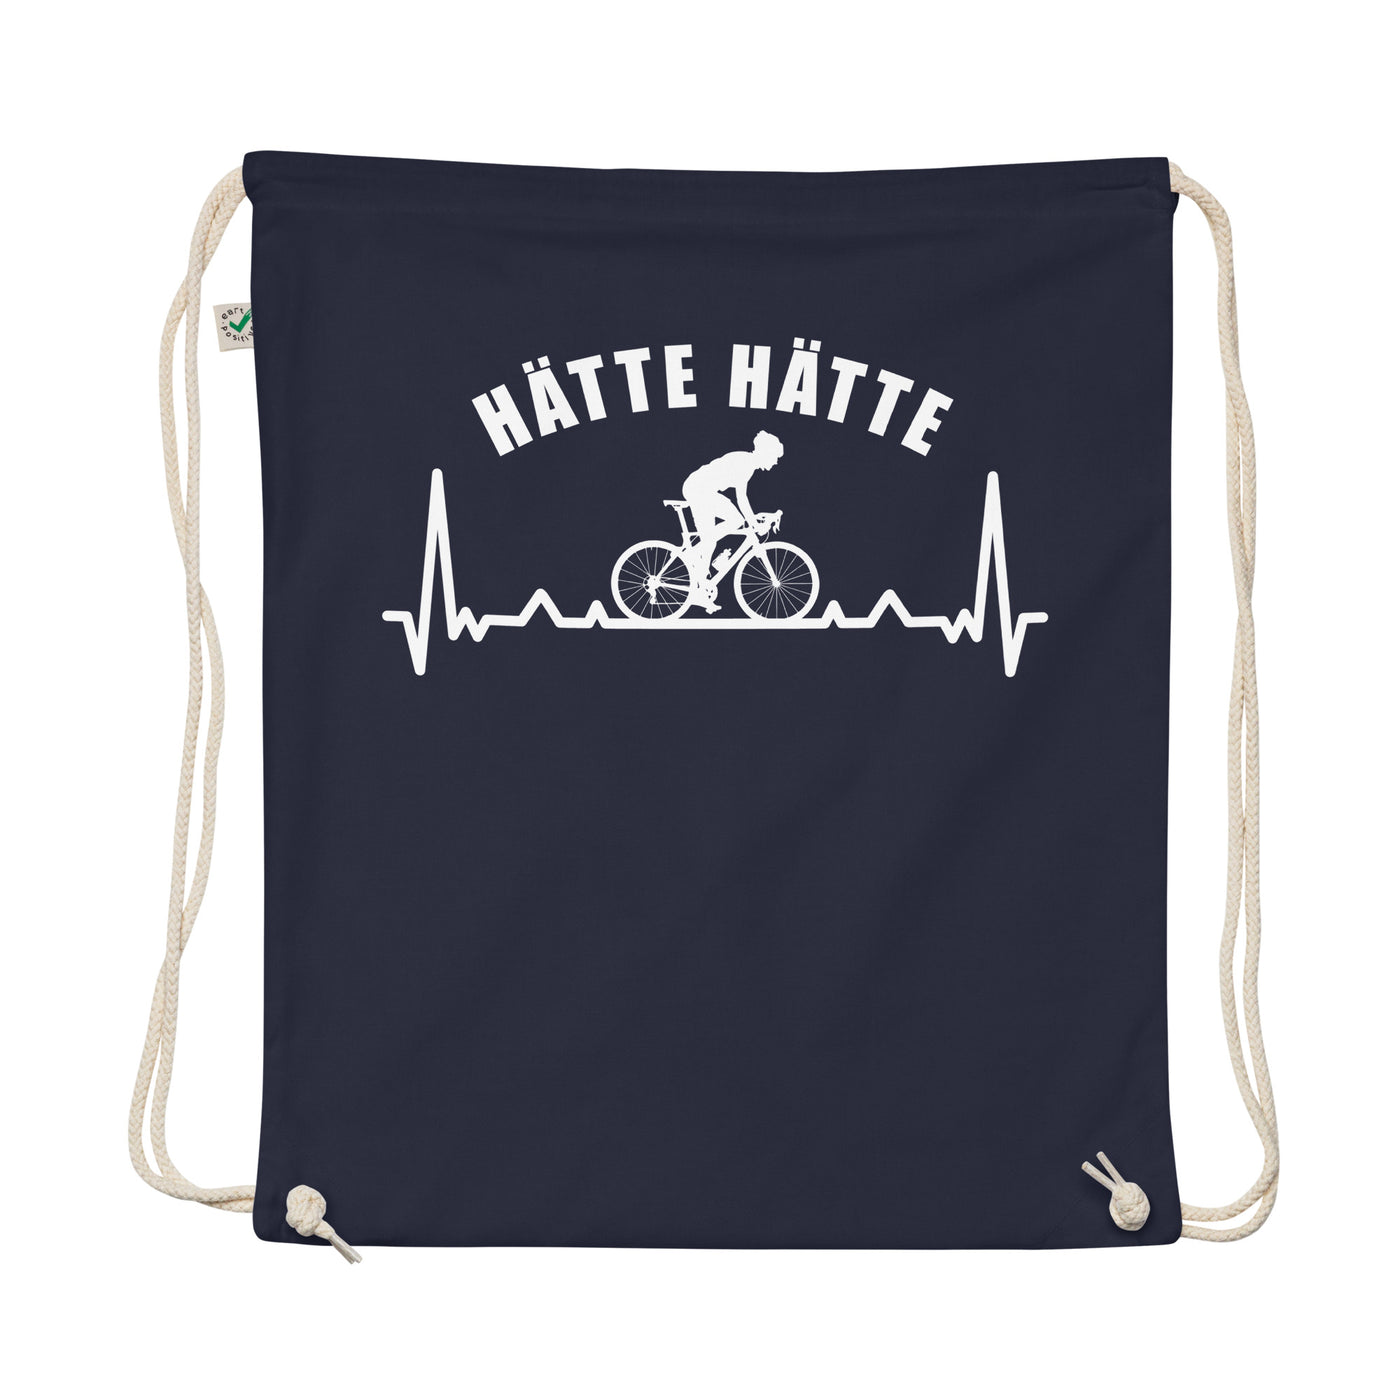 Hatte Hatte 3 - Organic Turnbeutel fahrrad